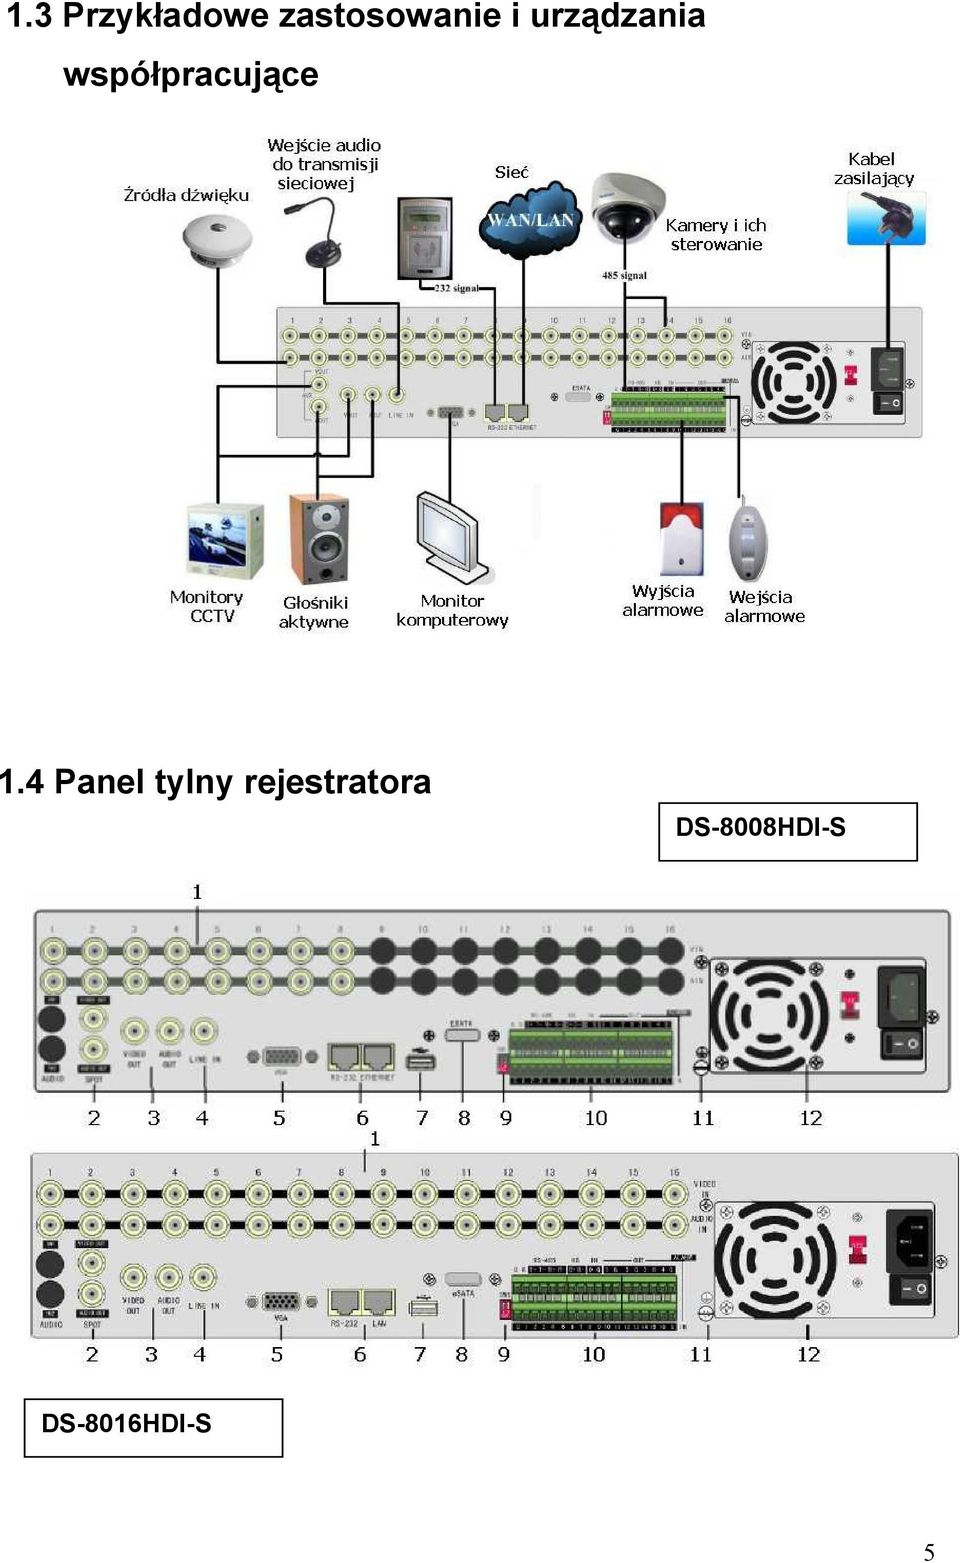 1.4 Panel tylny rejestratora